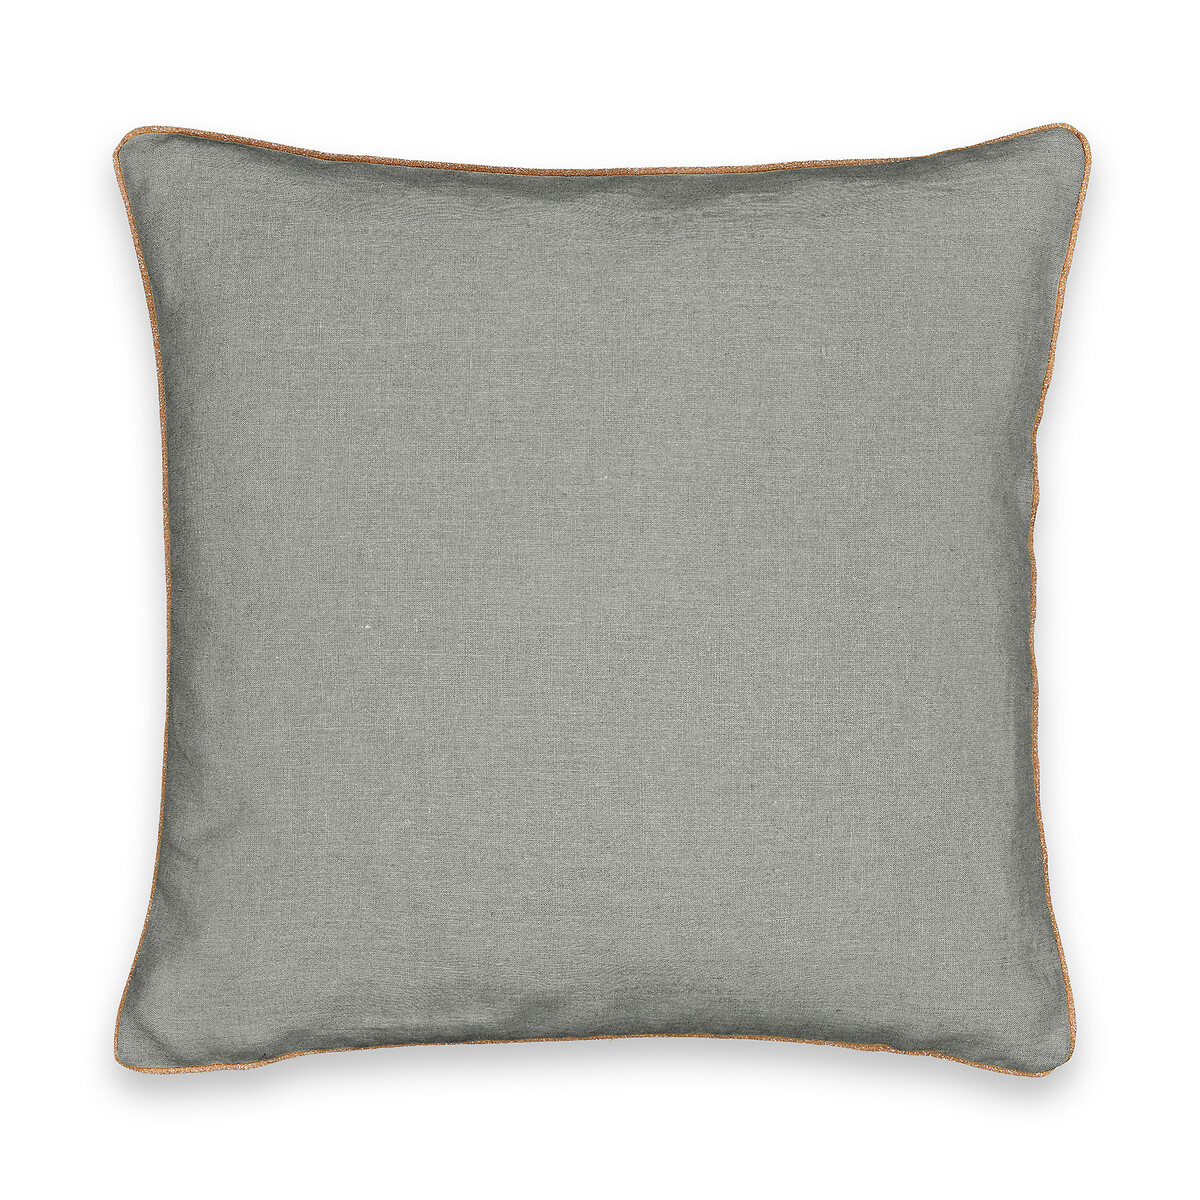 Чехол LaRedoute Для подушки из стираного льна Onega 45 x 45 см серый, размер 45 x 45 см - фото 1